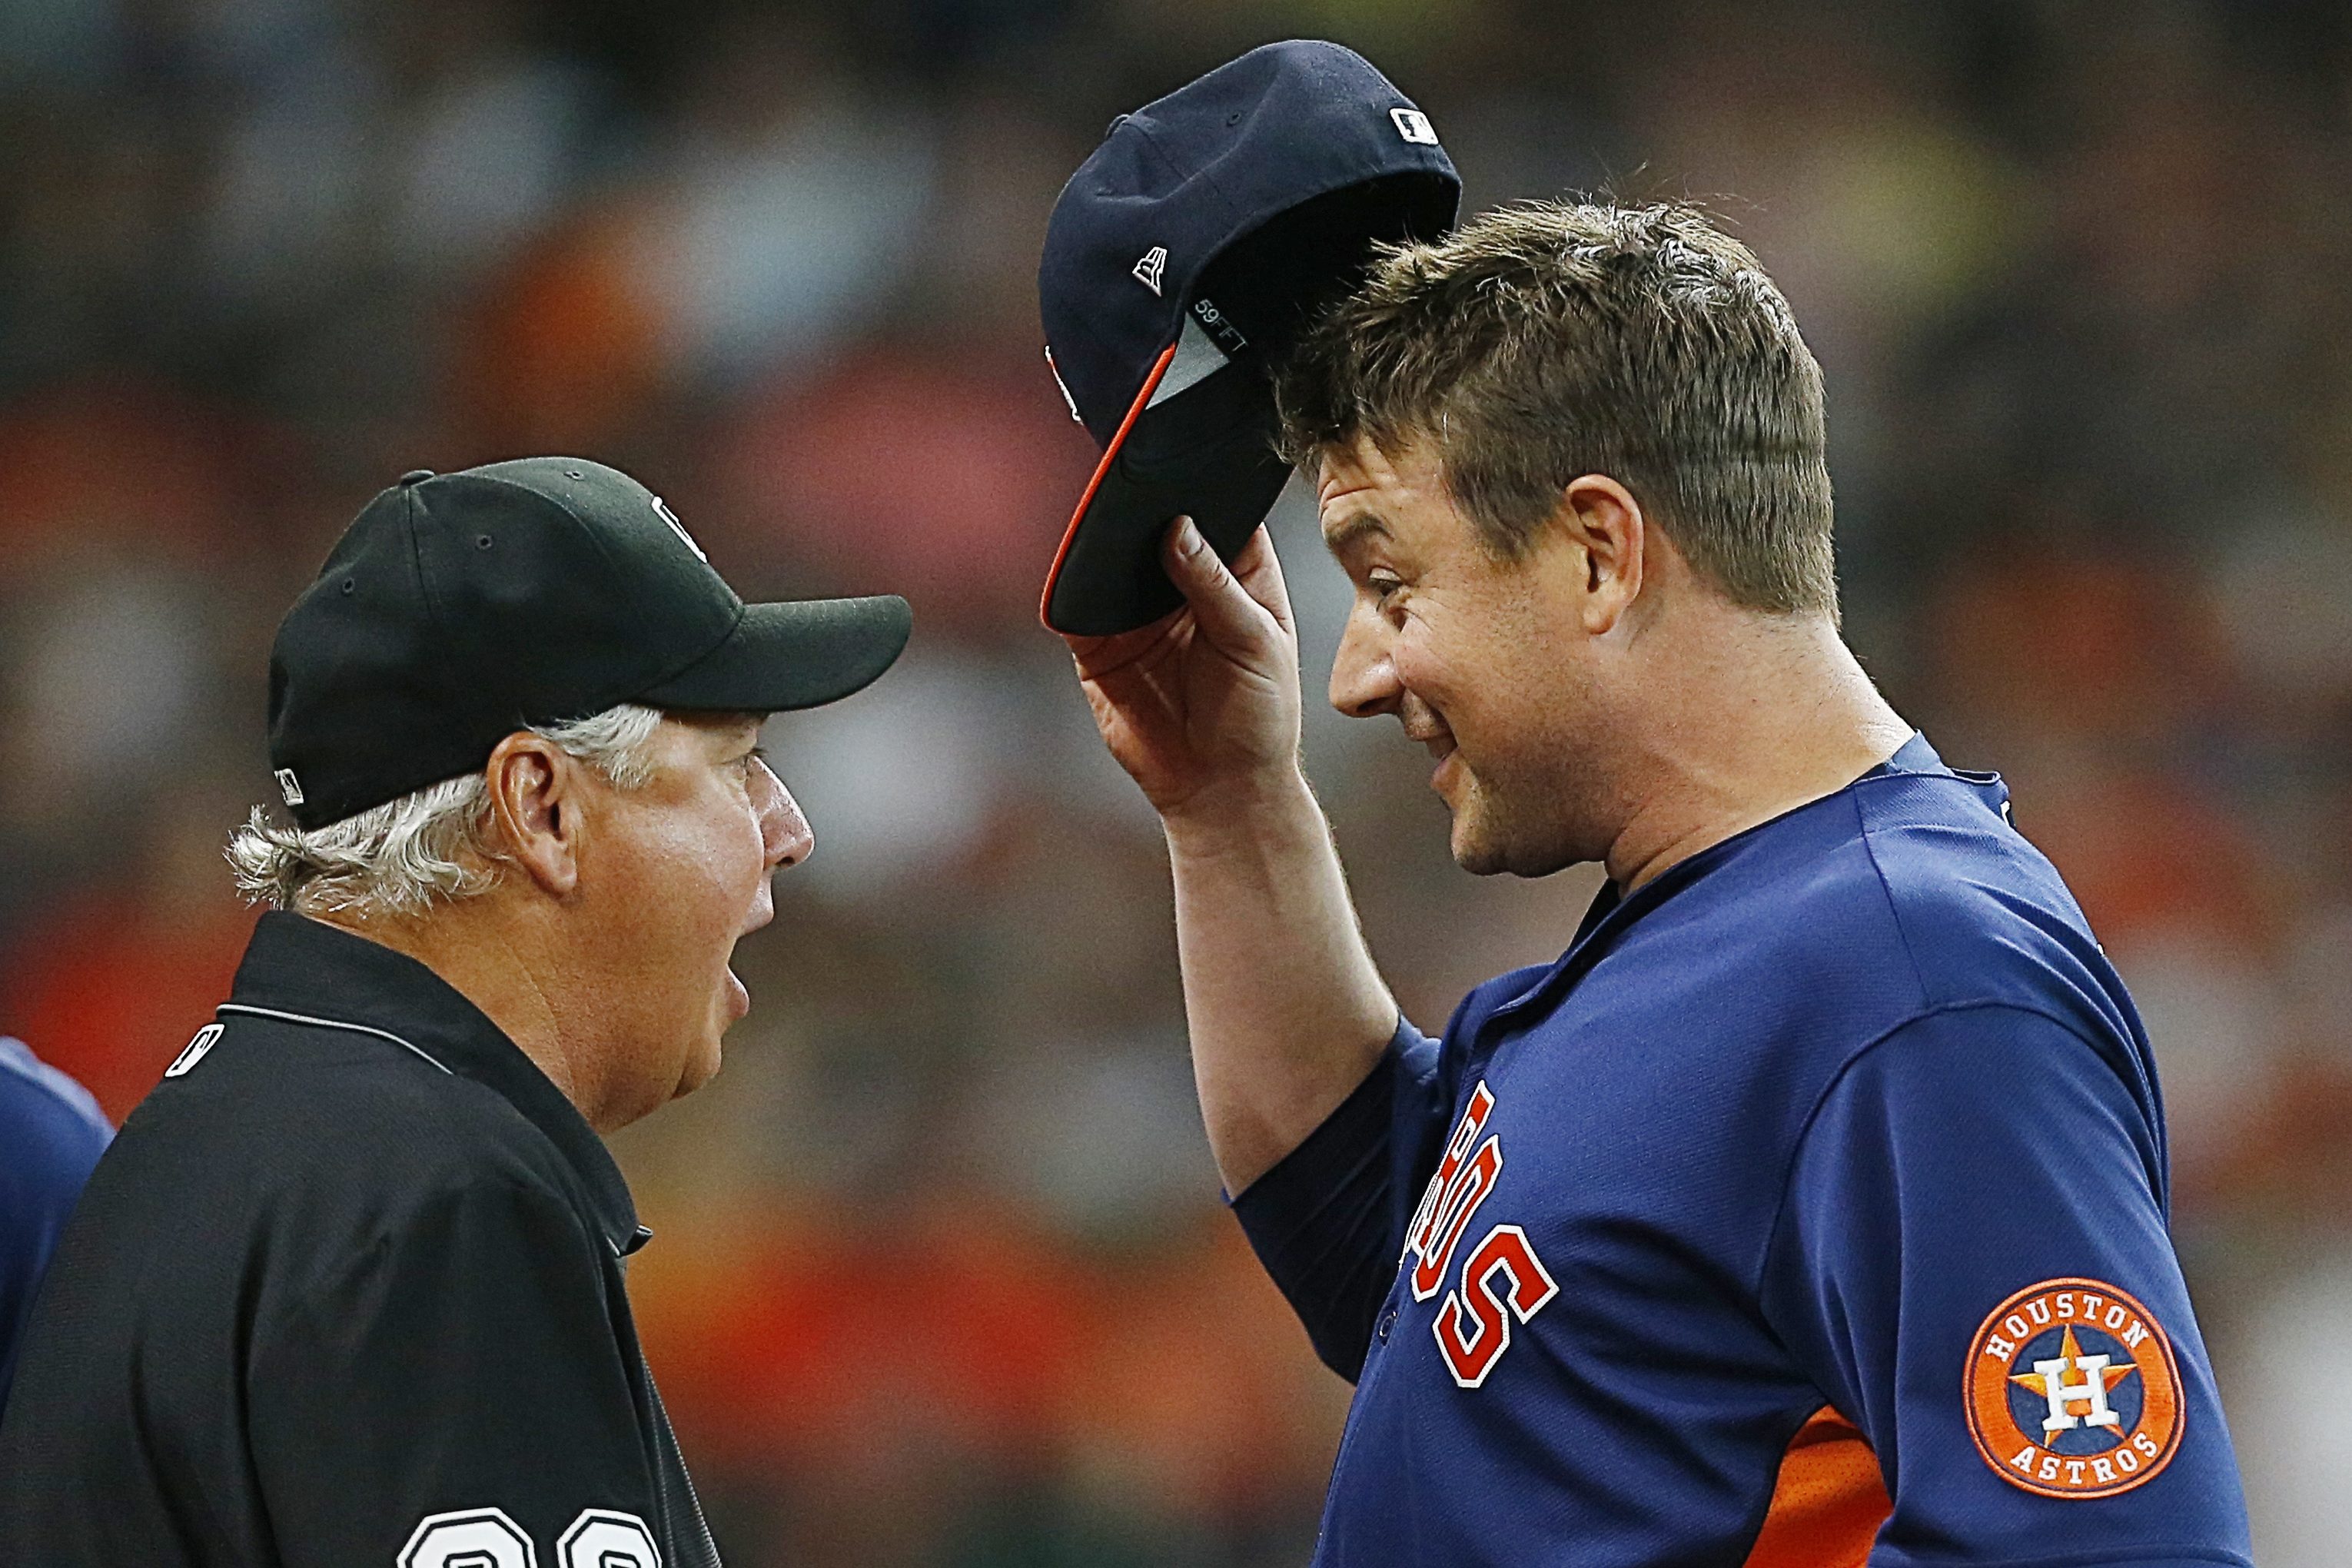 Umpire Tom Hallion checks Joe Smith of the Houston Astros for foreign substances